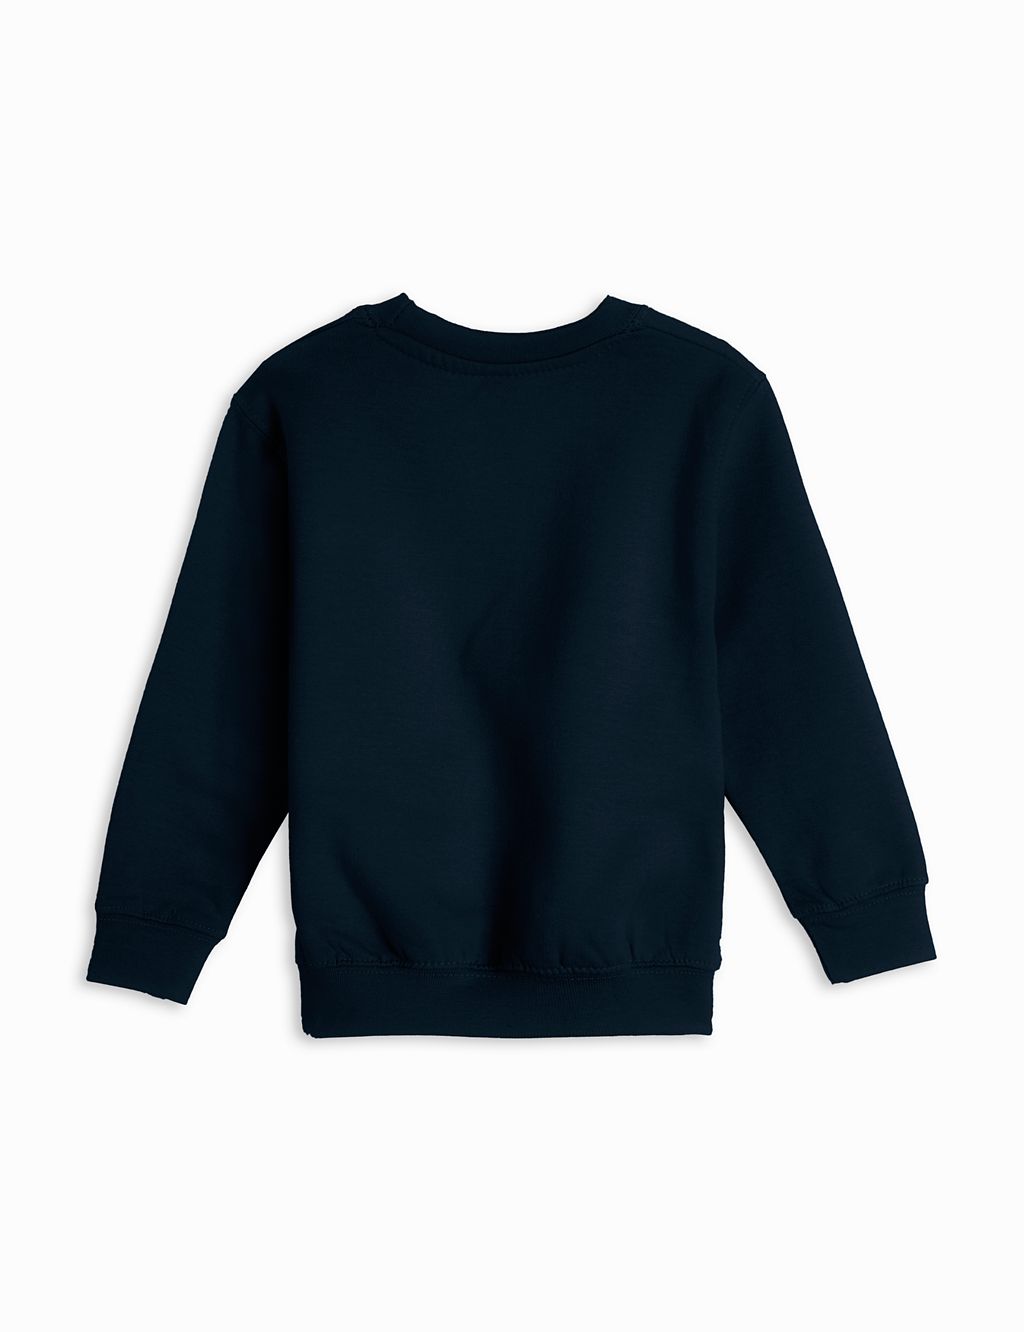 Personalised Mini Sweatshirt (3-11 Yrs) 1 of 4